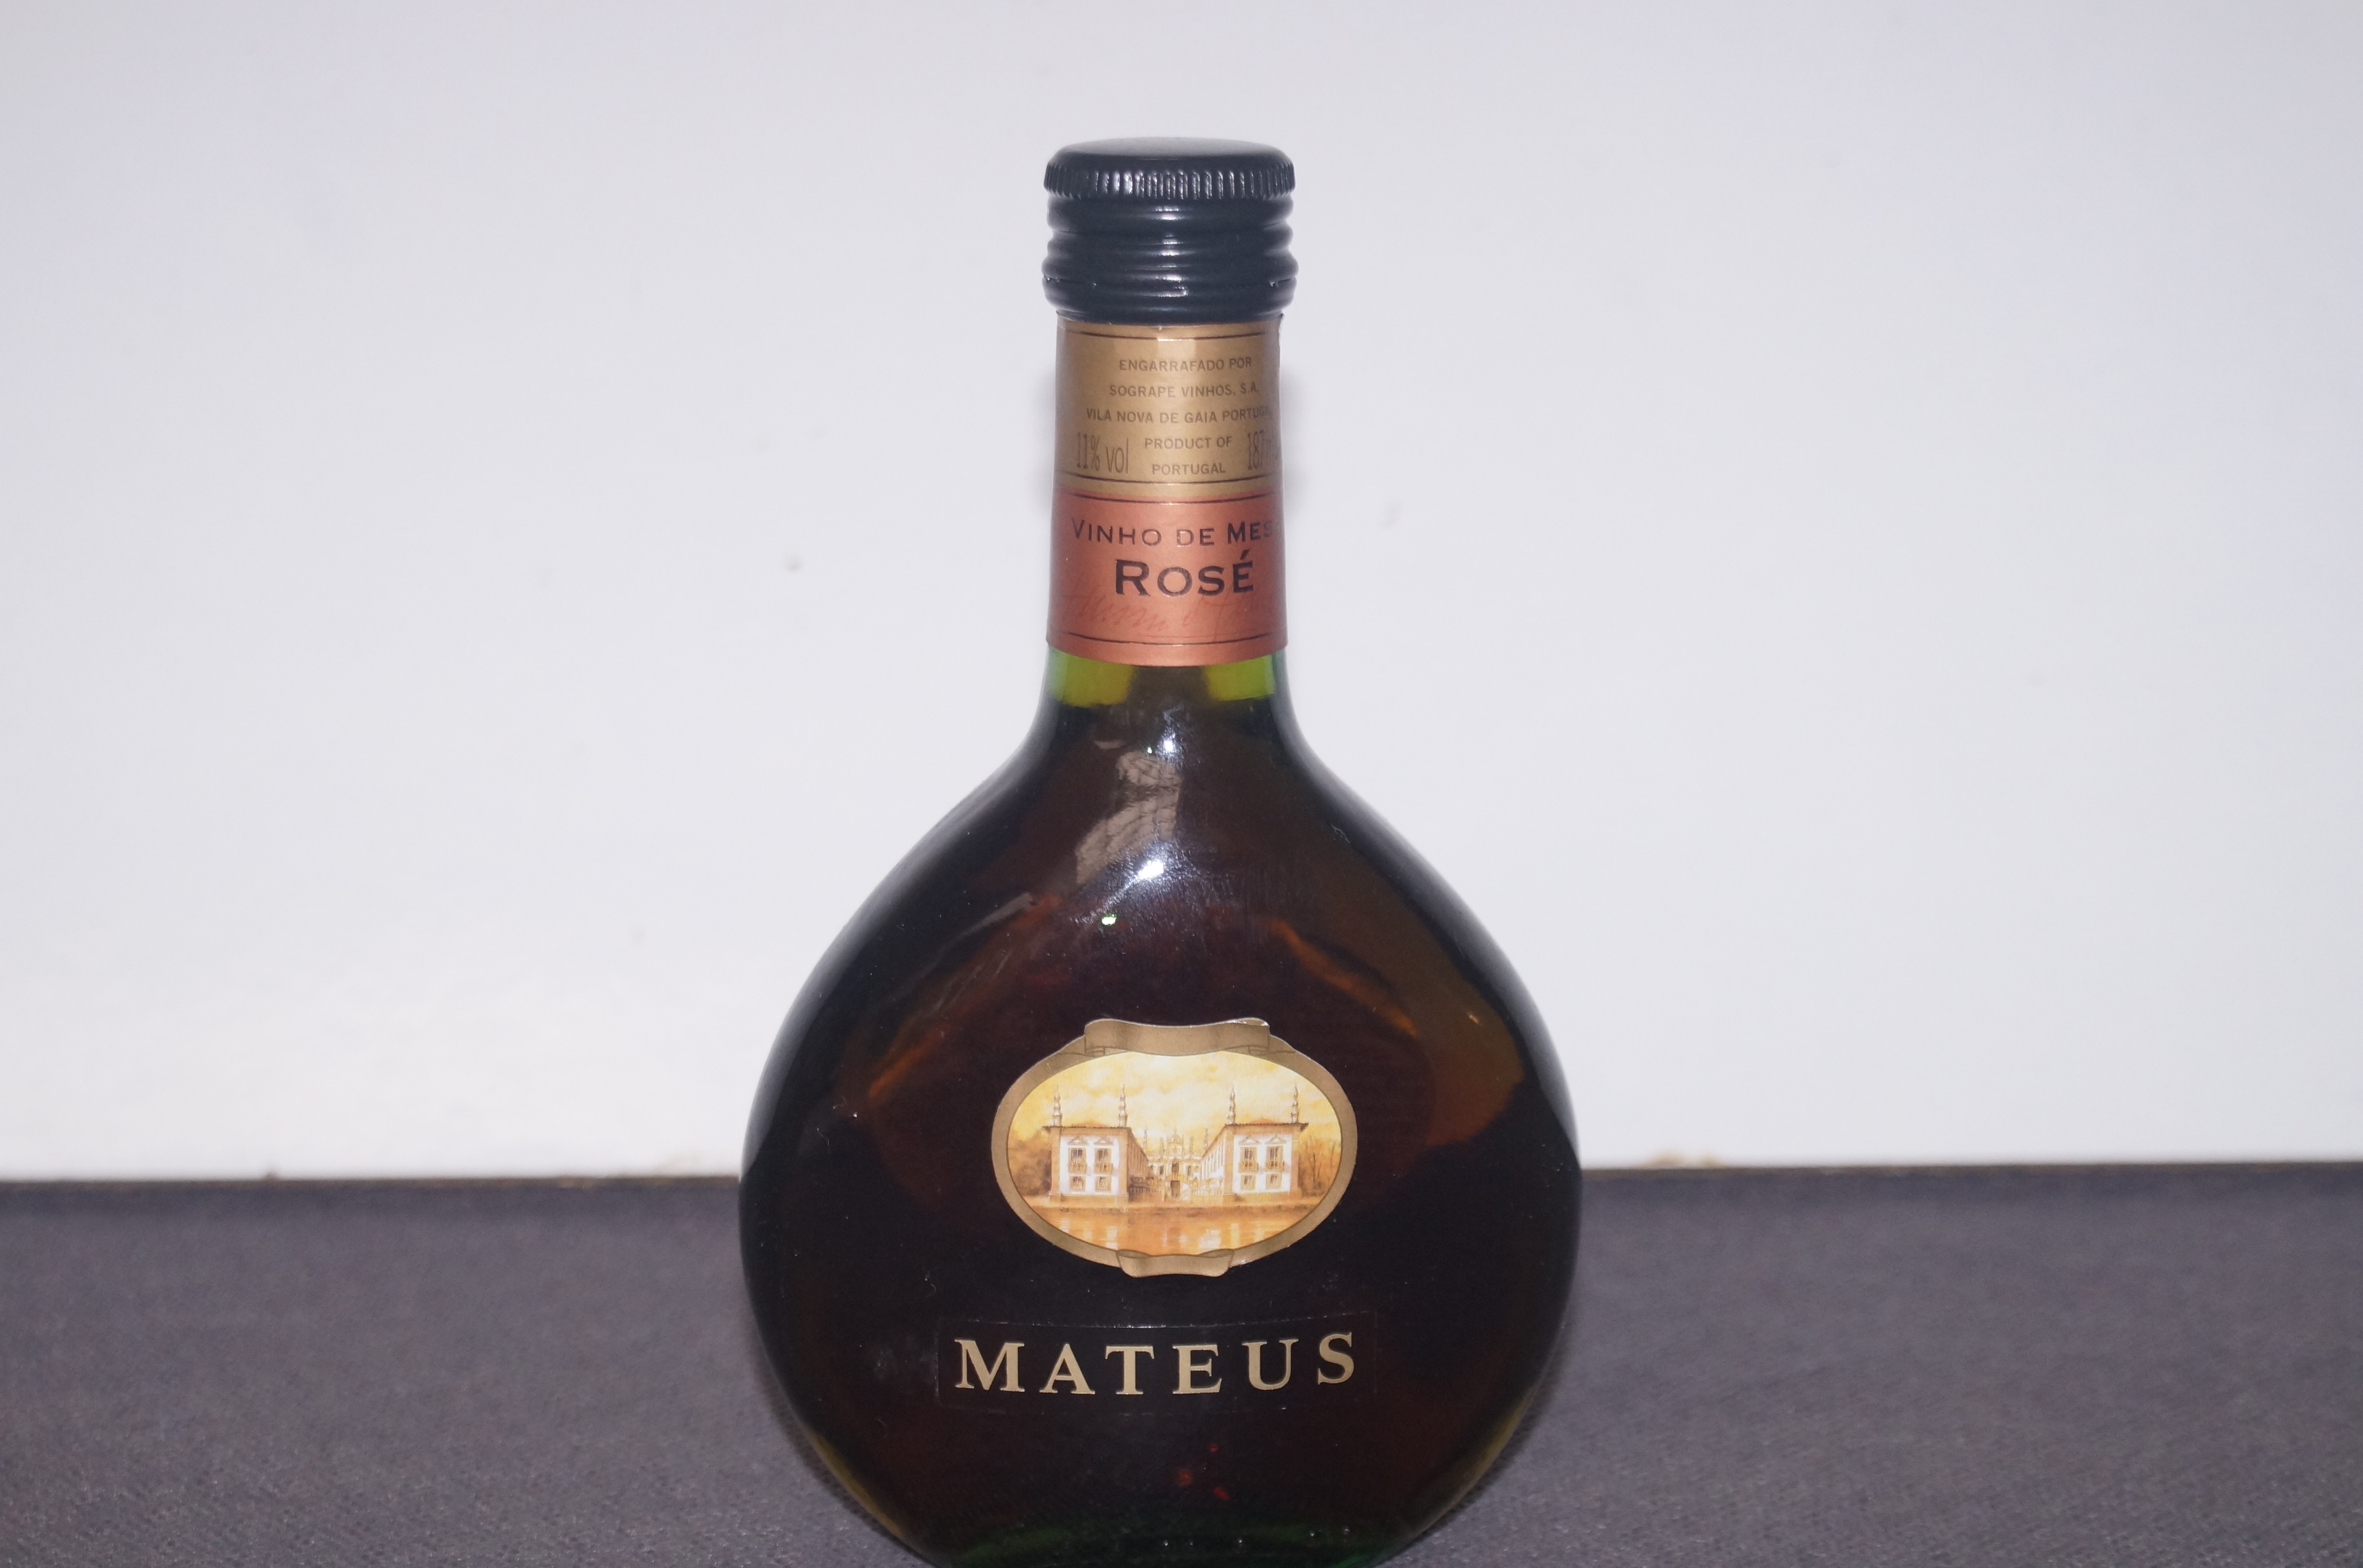 Mateus Vinho De Mesa Rose 187ml (Unopened)